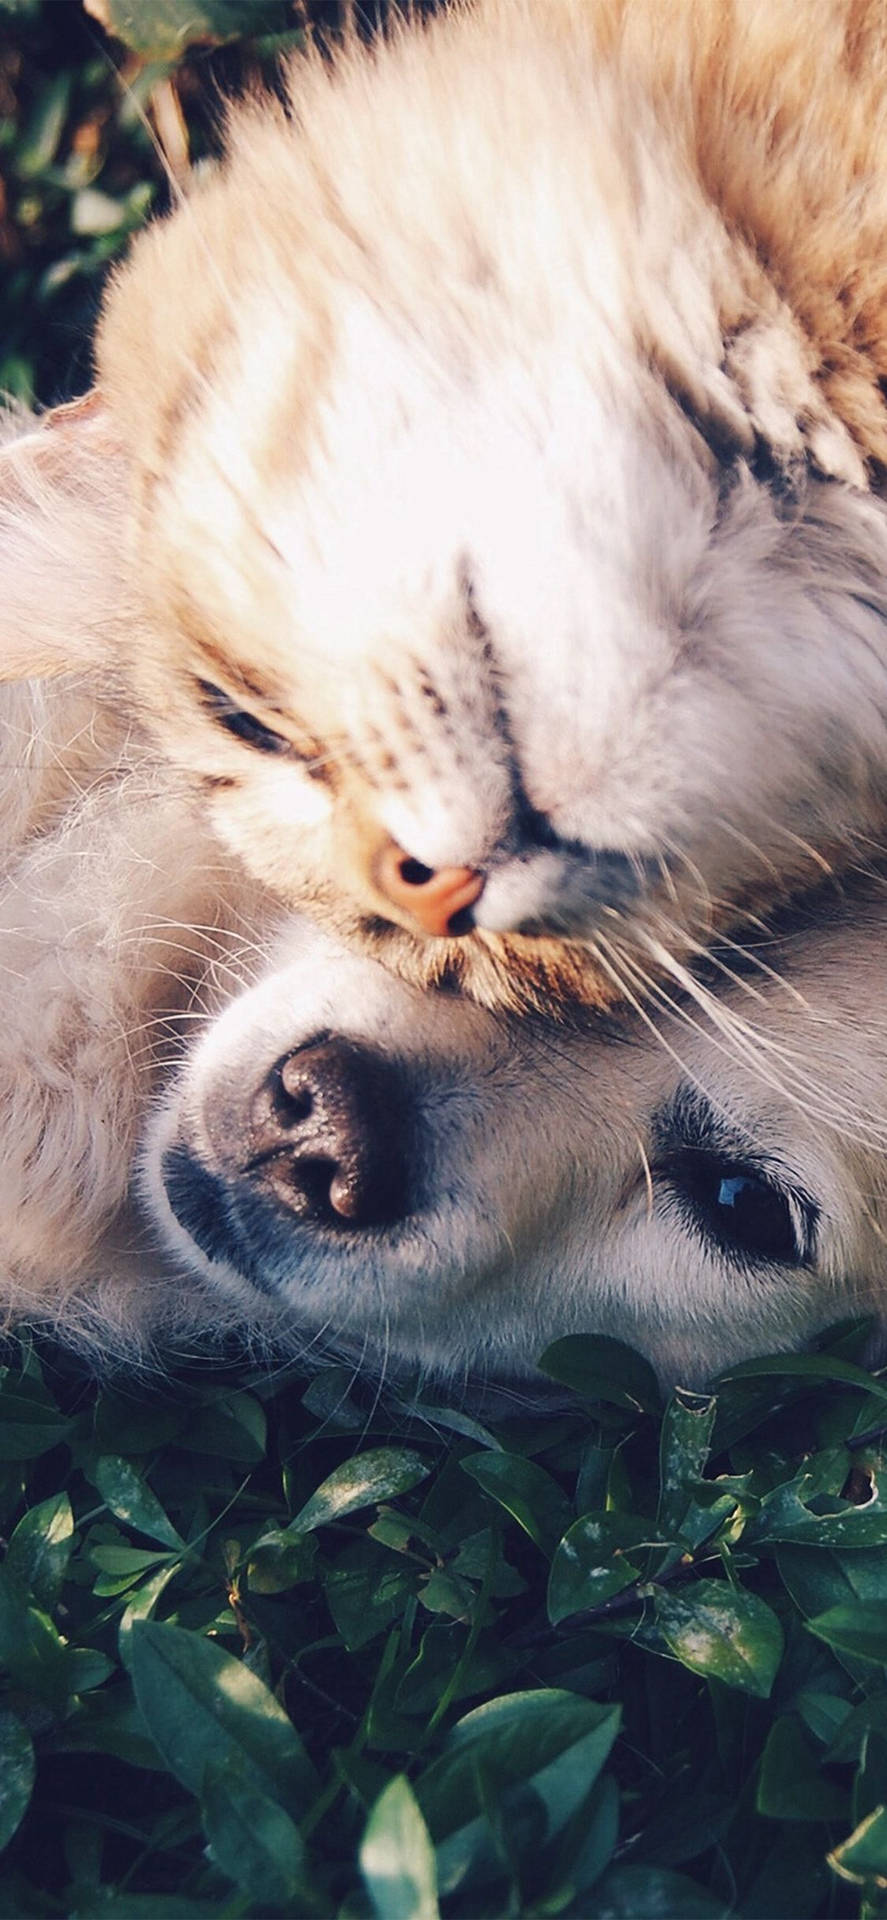 Cat And Dog Cuddling Wallpaper